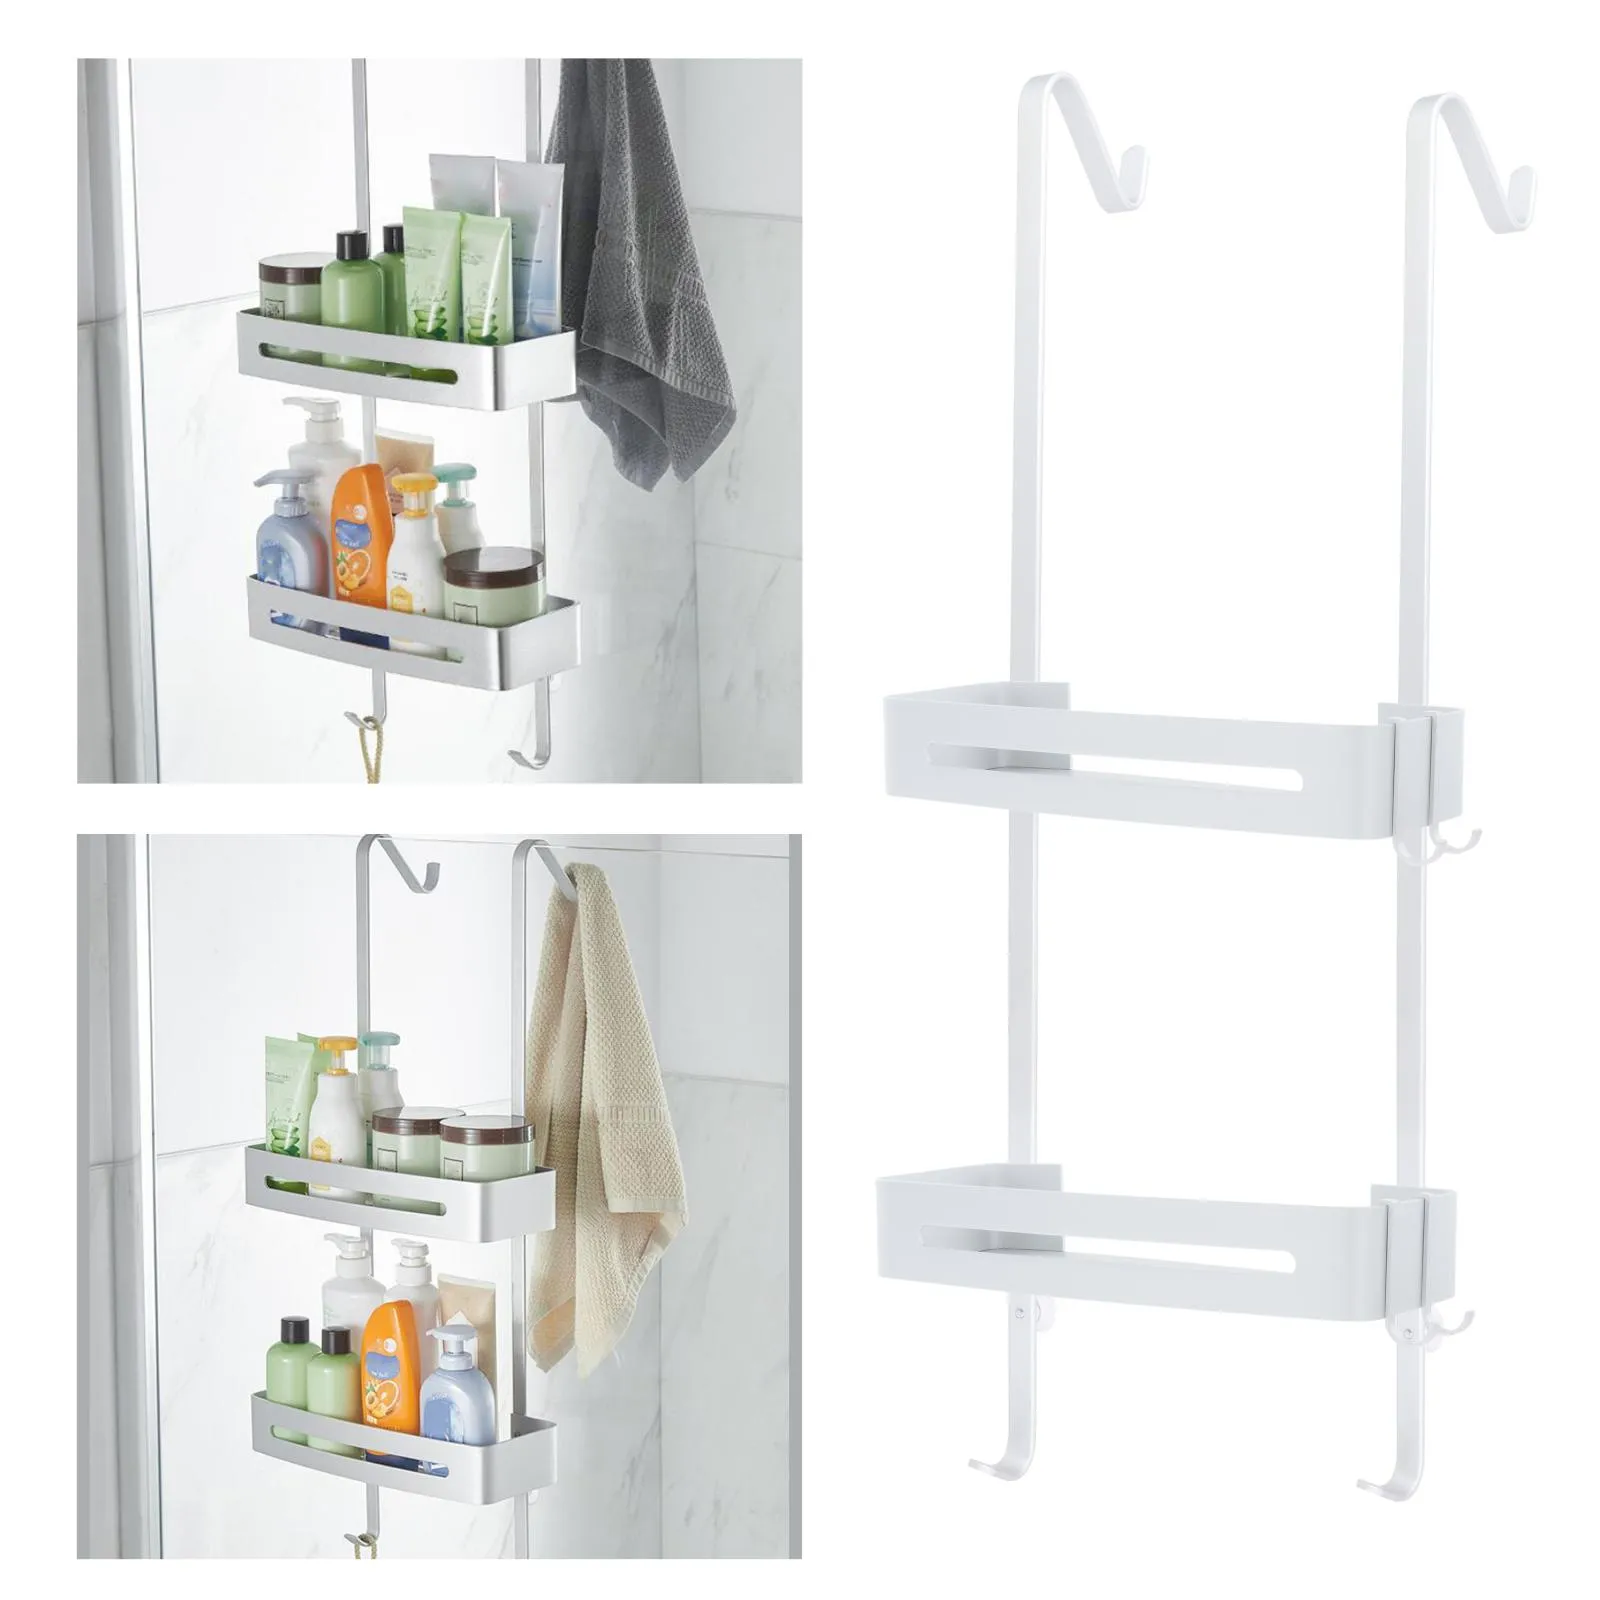 Hanging Bath Shelves Shower Caddy Over Door Bathroom Storage Shelf Organizer Over Shower Door Caddy Bathroom Basket Holder